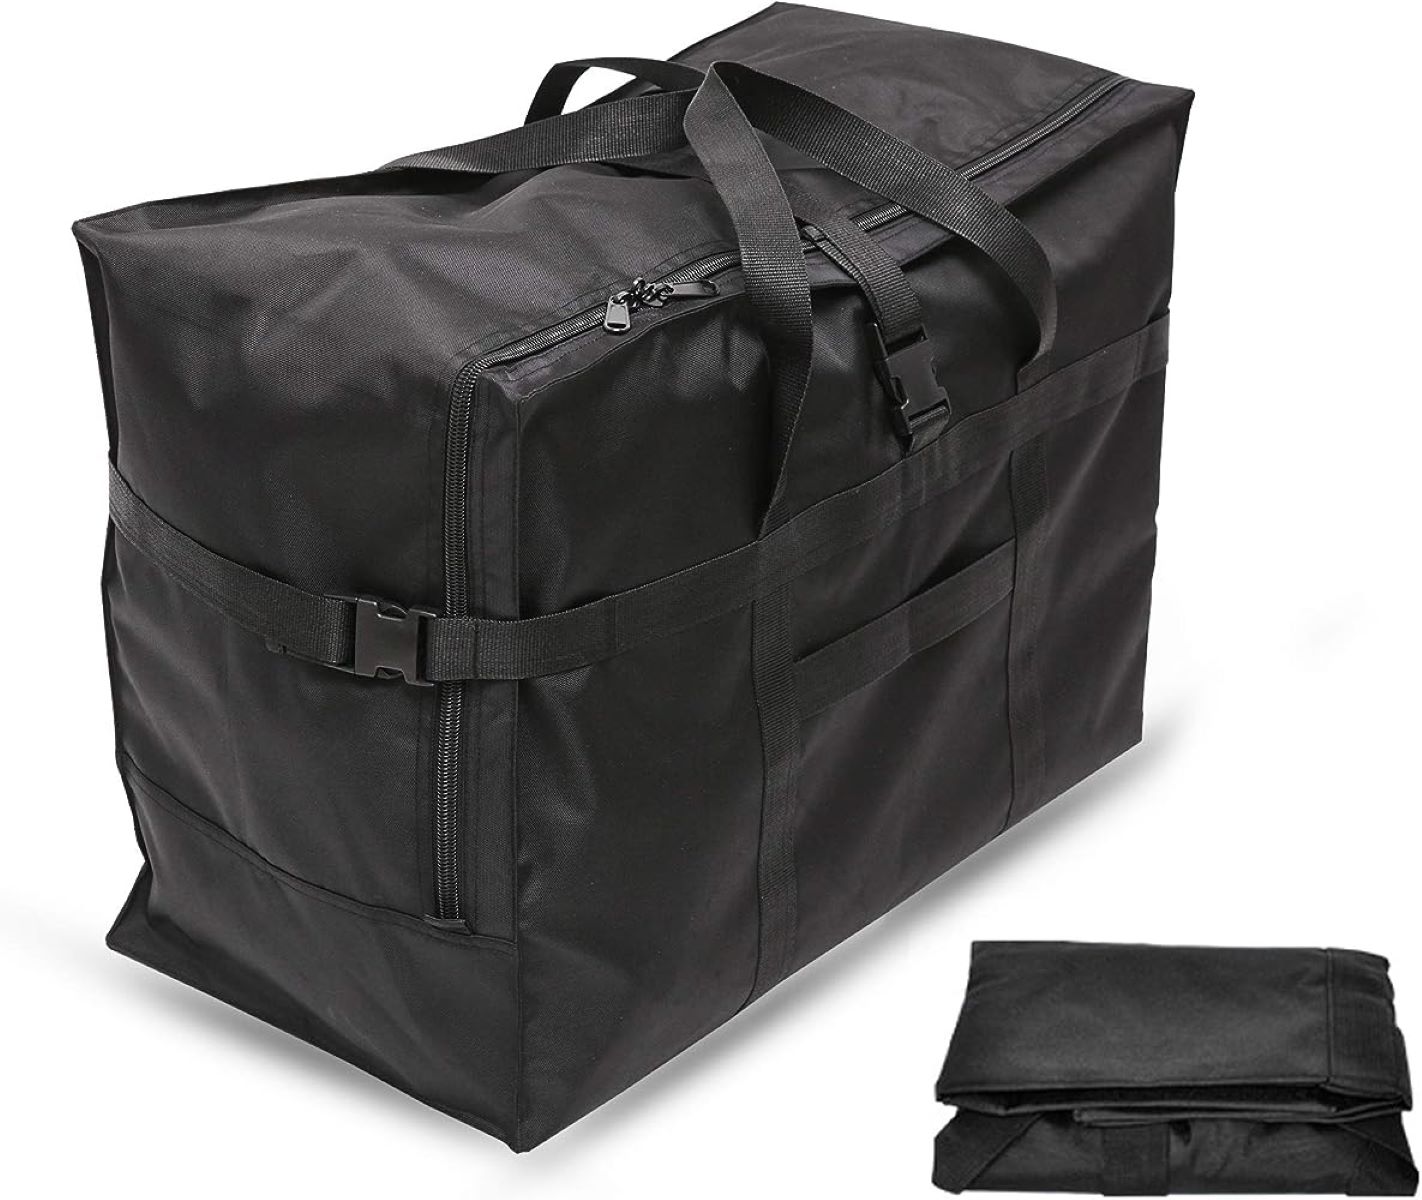 COOLBEBE 36 Sports Duffle Bag - 100L Large Travel